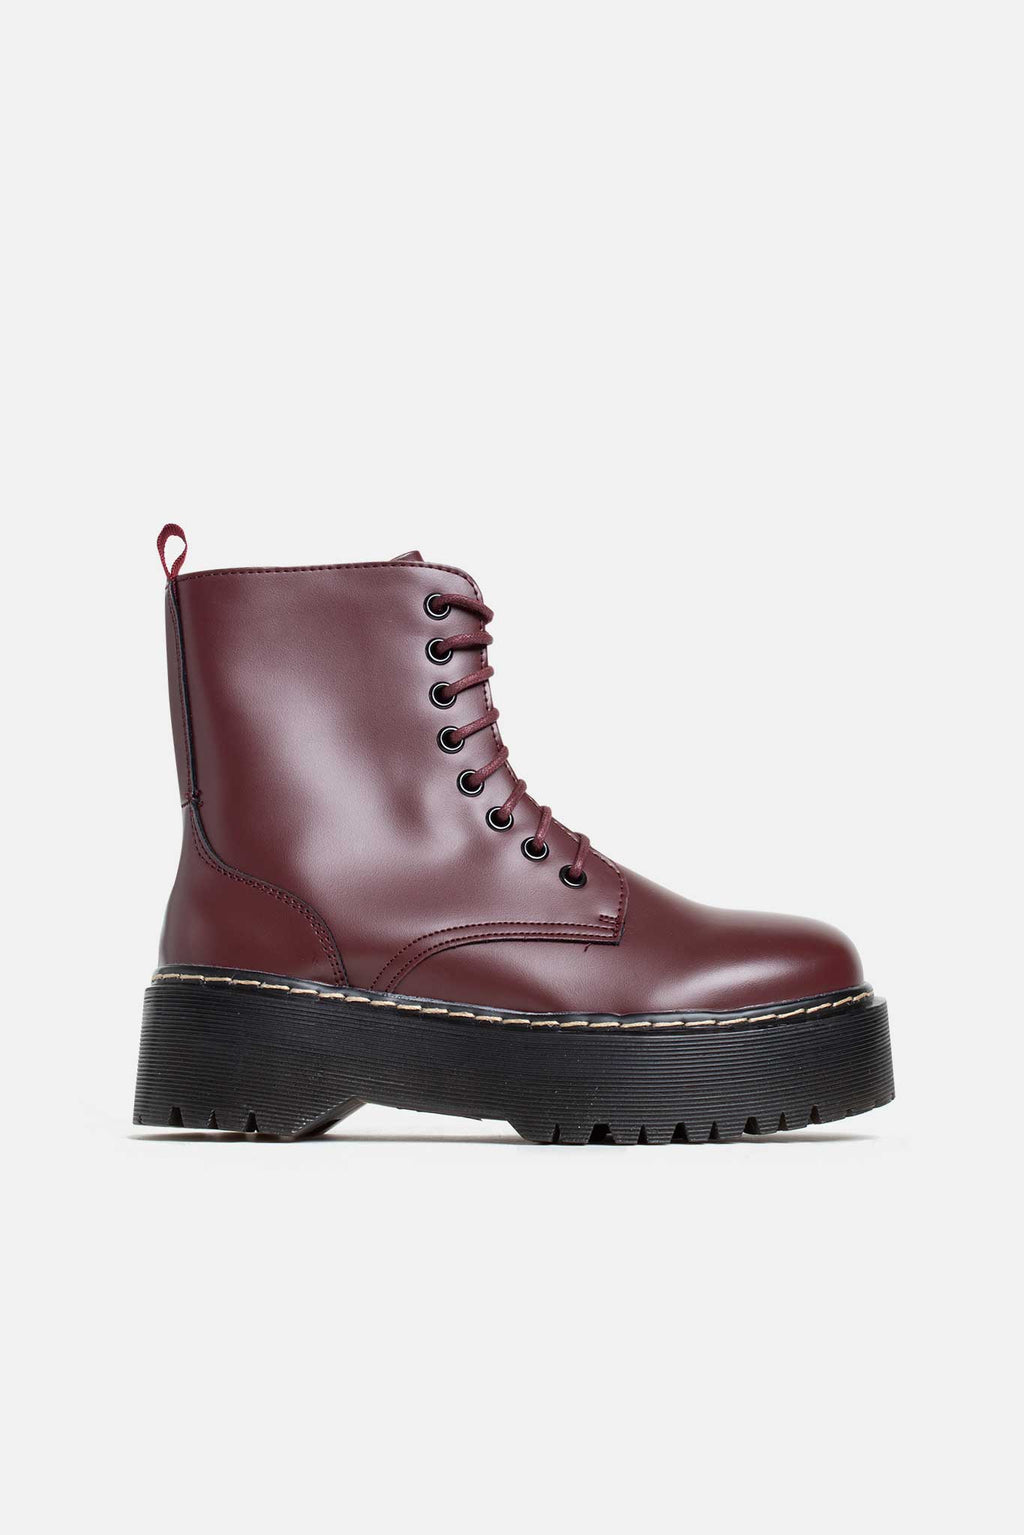 burgundy chunky boots